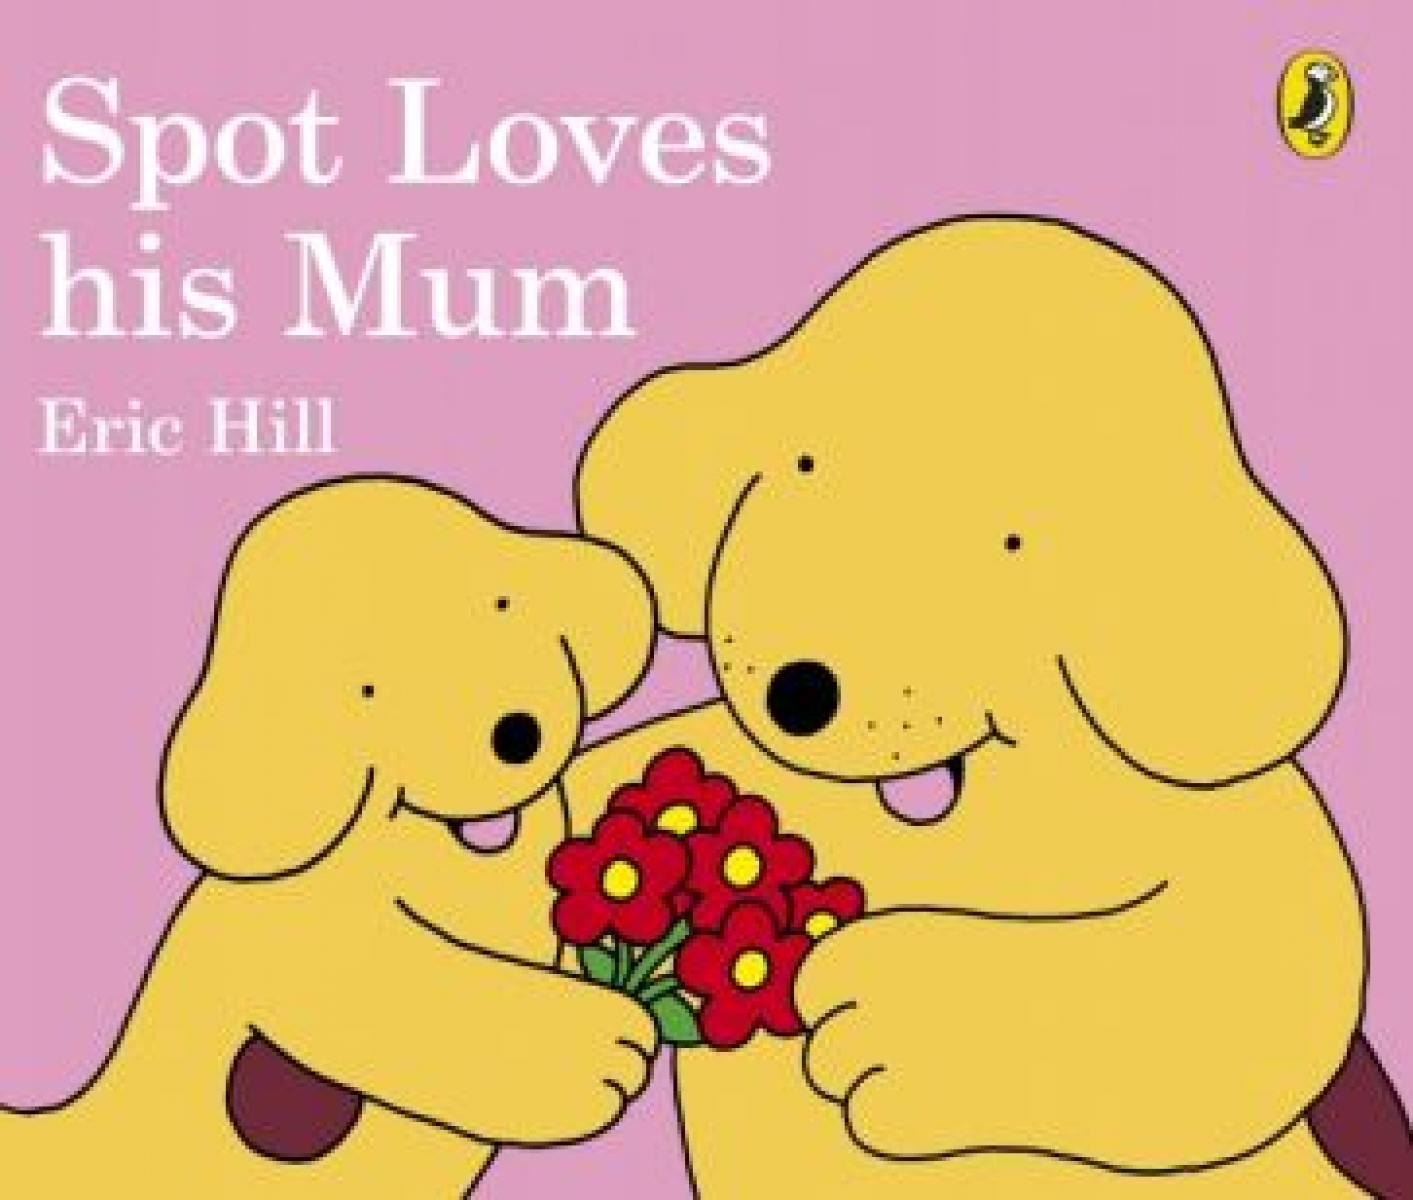 Eric, Hill Spot loves his mum 